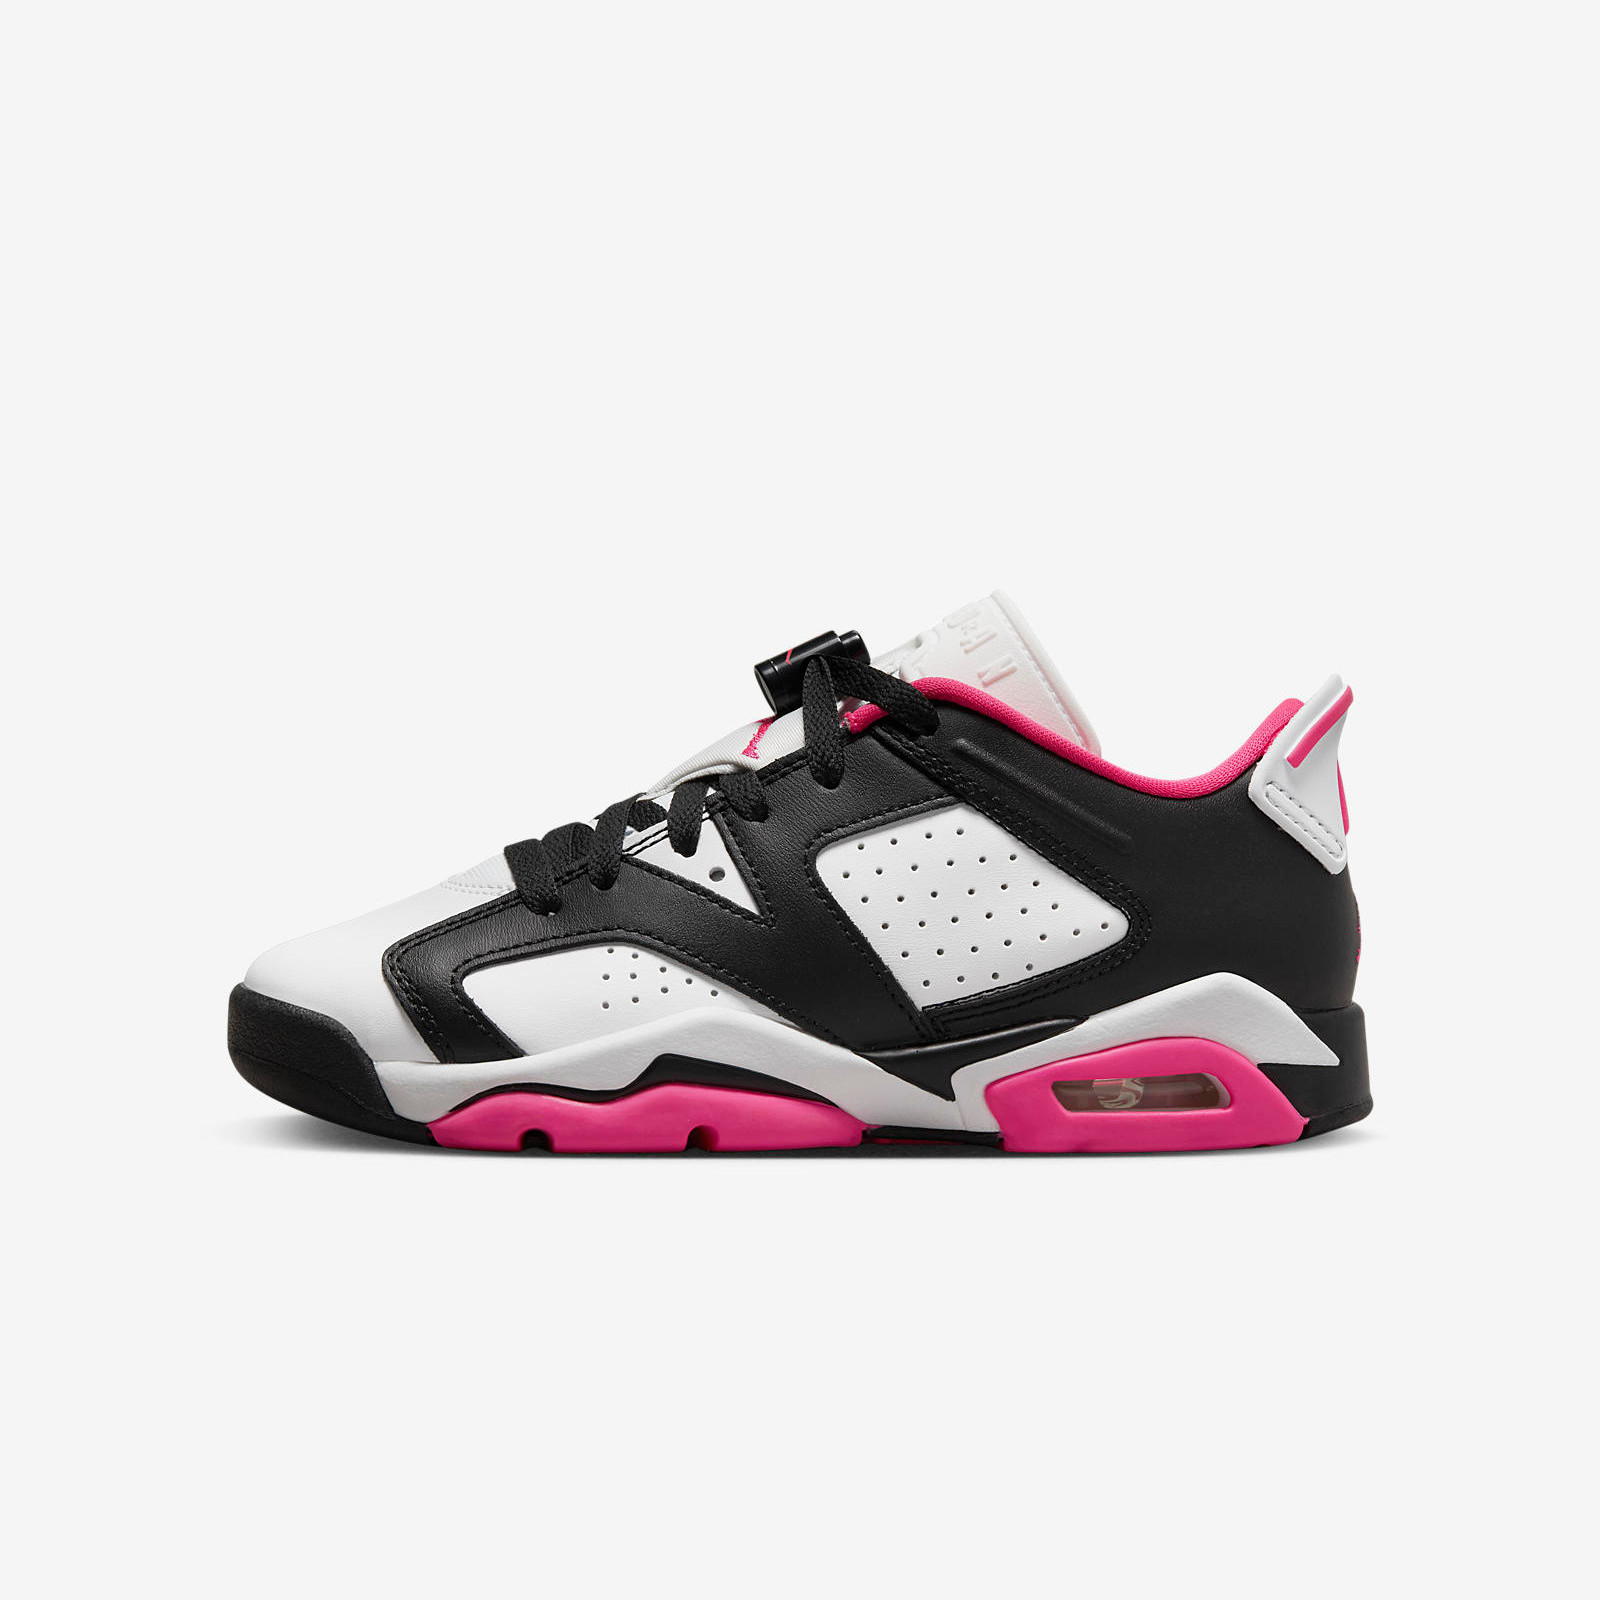 Air Jordan 6 Retro Low (GS)
« Fierce Pink »